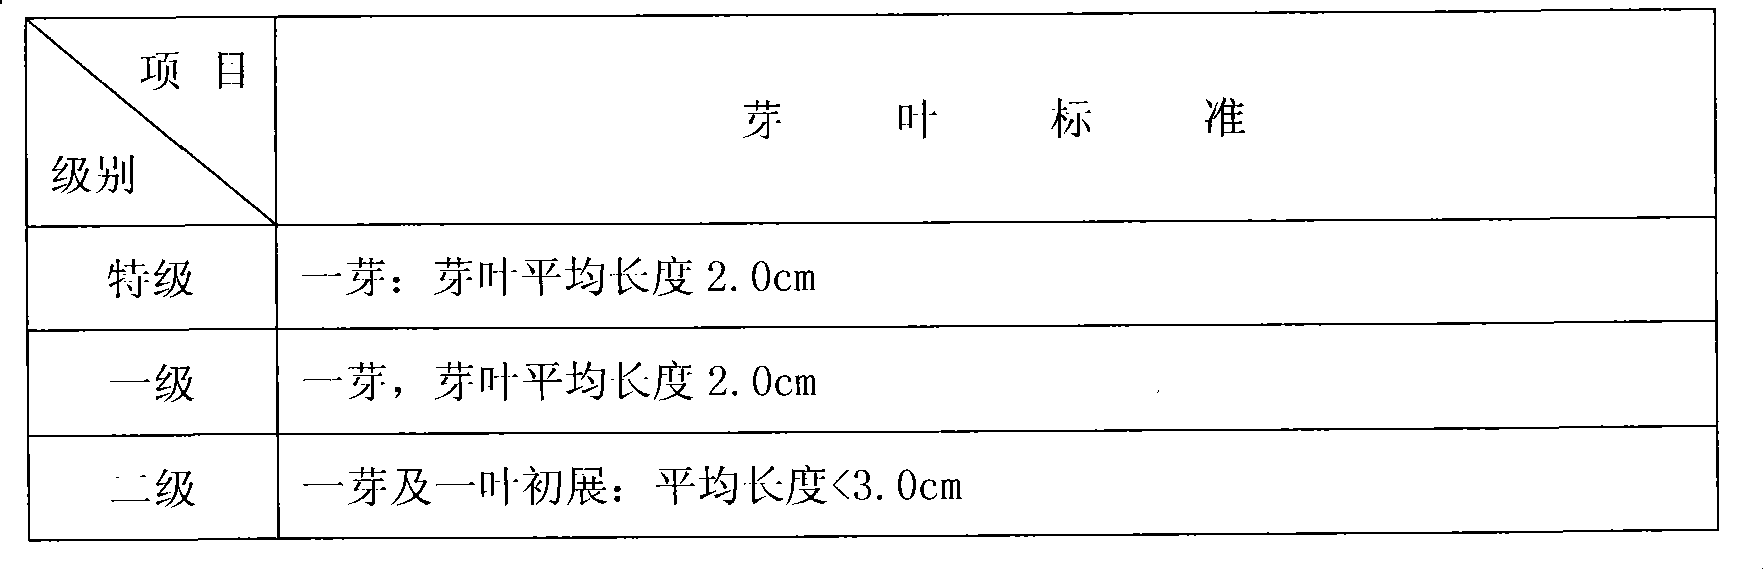 Technique for processing Wuhouchun tea